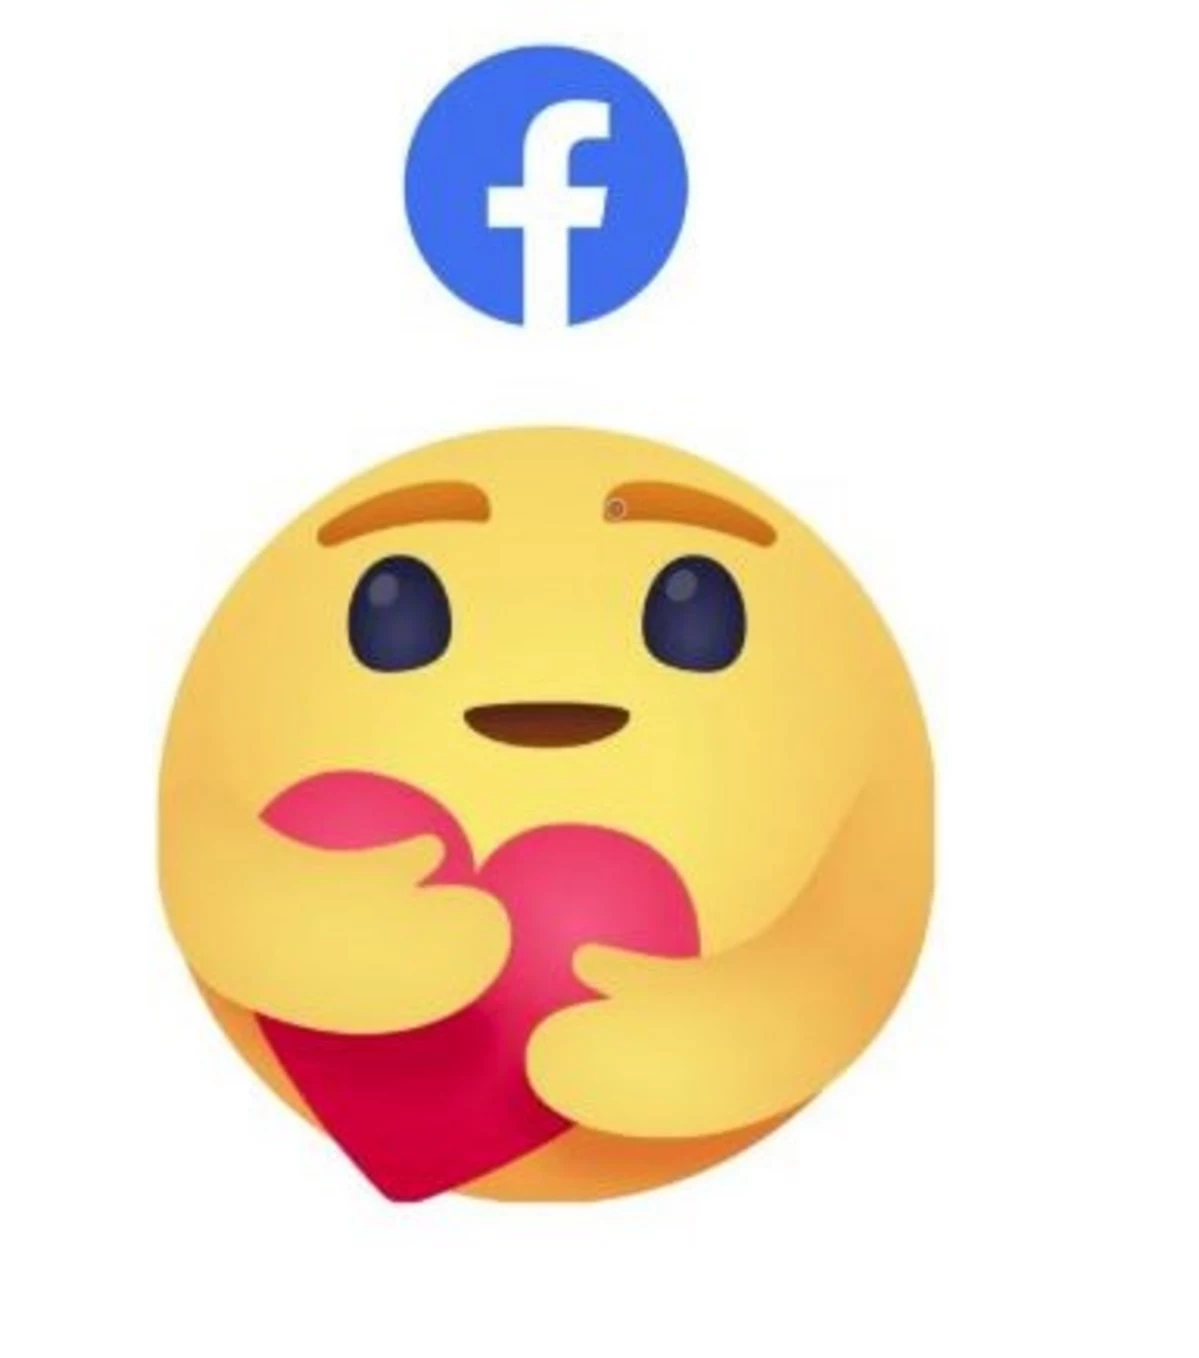 How To Get The New Facebook Cares Emoji